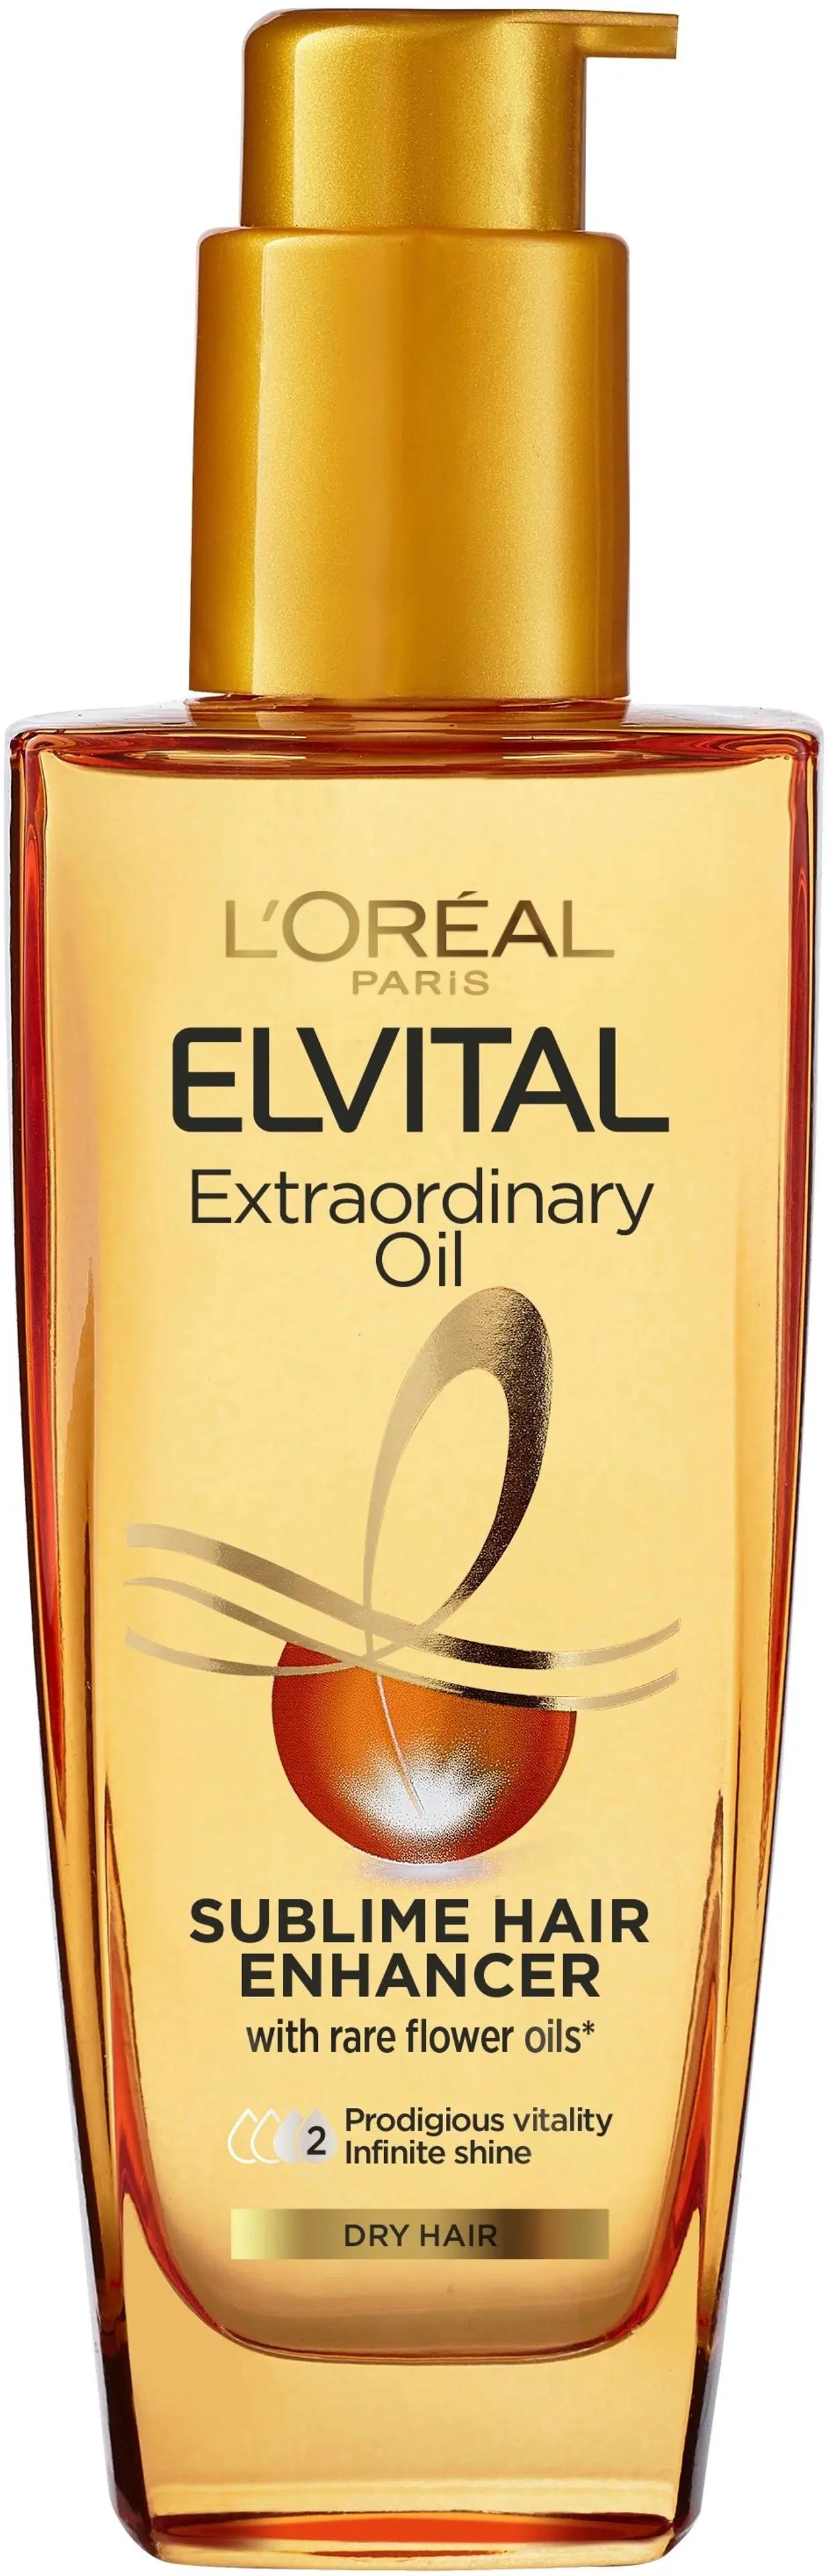 L'Oréal Paris Elvital Extraordinary Oil hiusöljy kaikille hiustyypeille 100ml